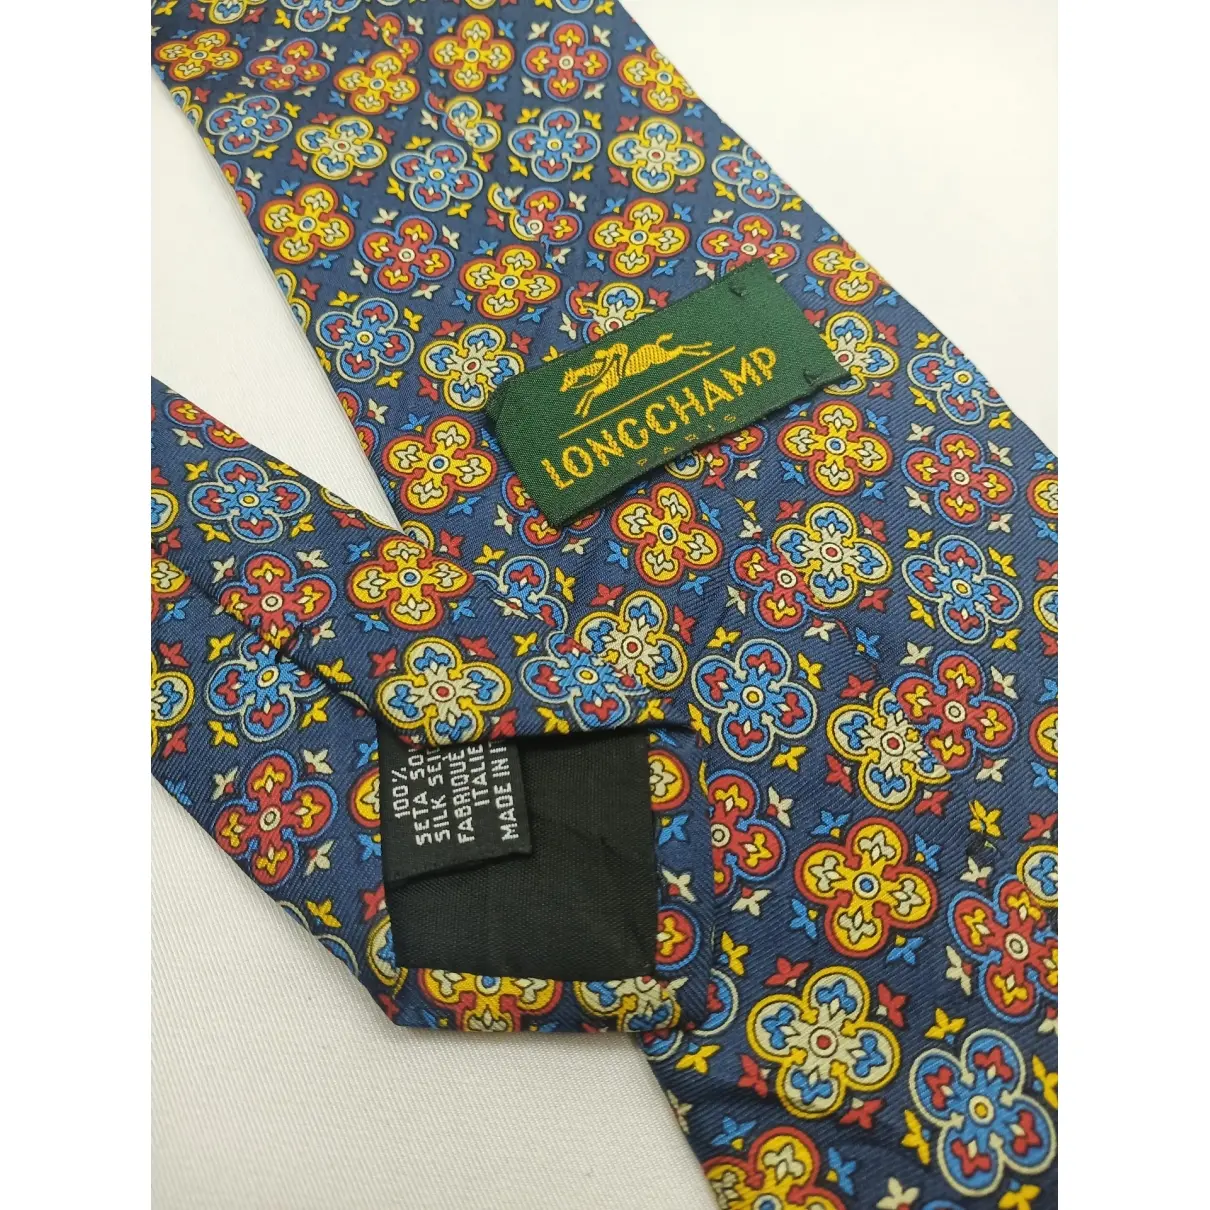 Longchamp Silk tie for sale